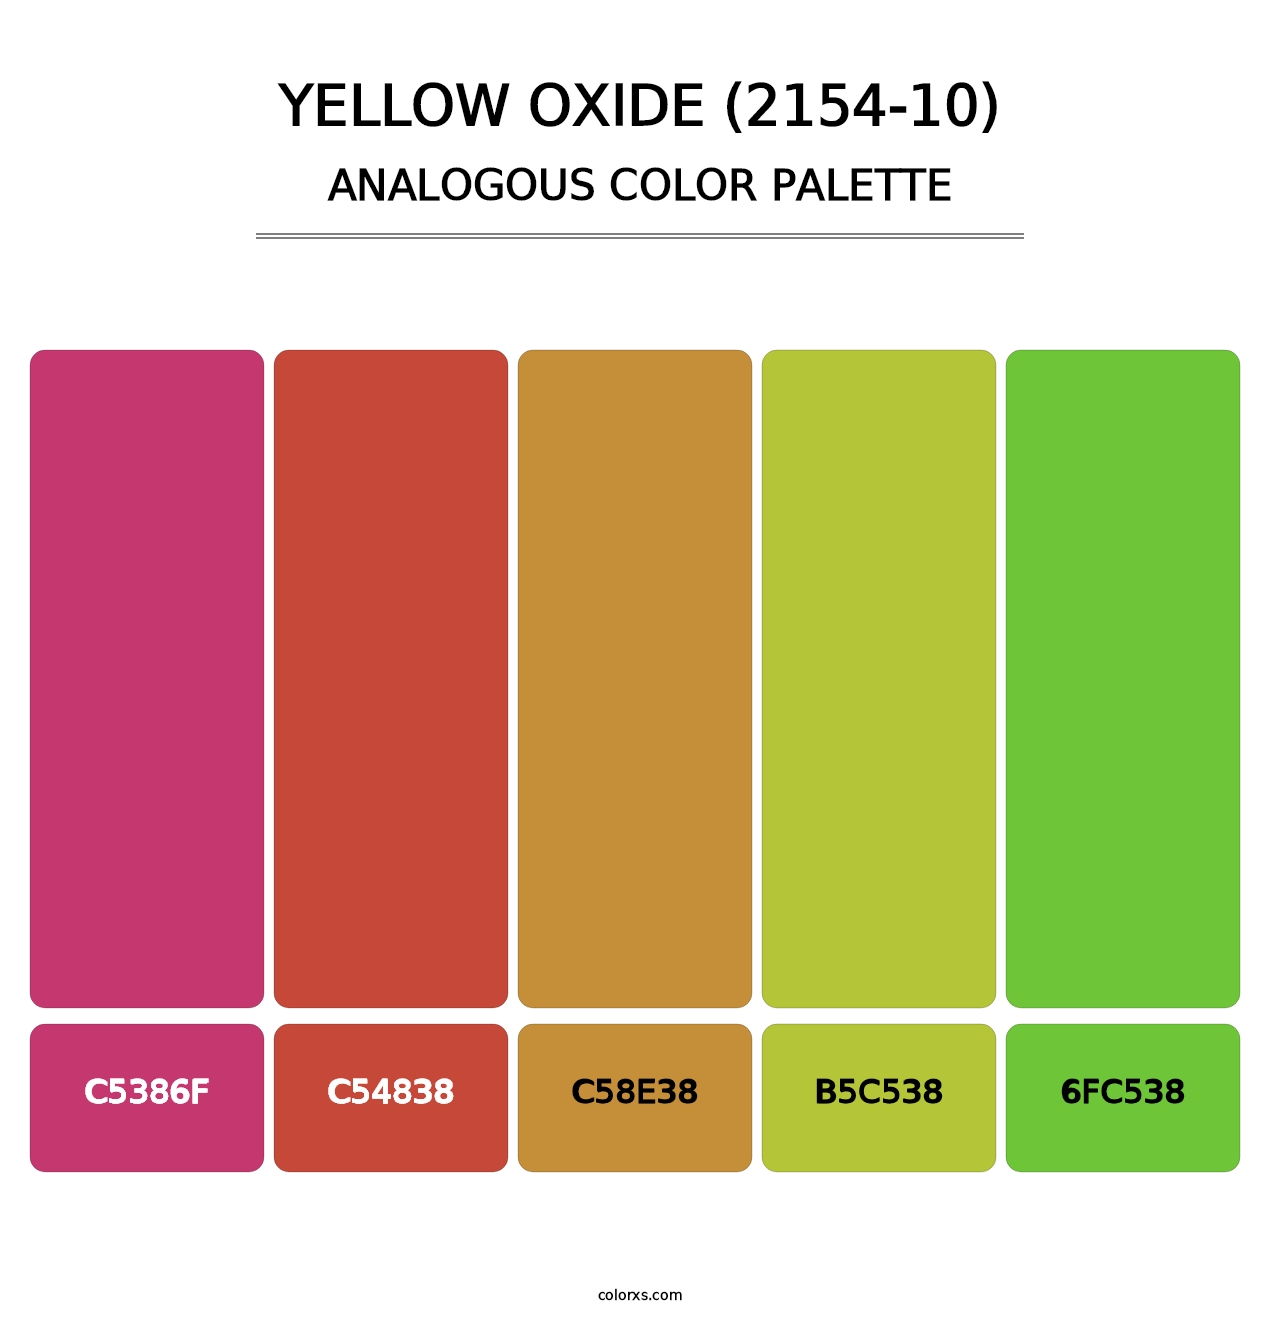 Yellow Oxide (2154-10) - Analogous Color Palette